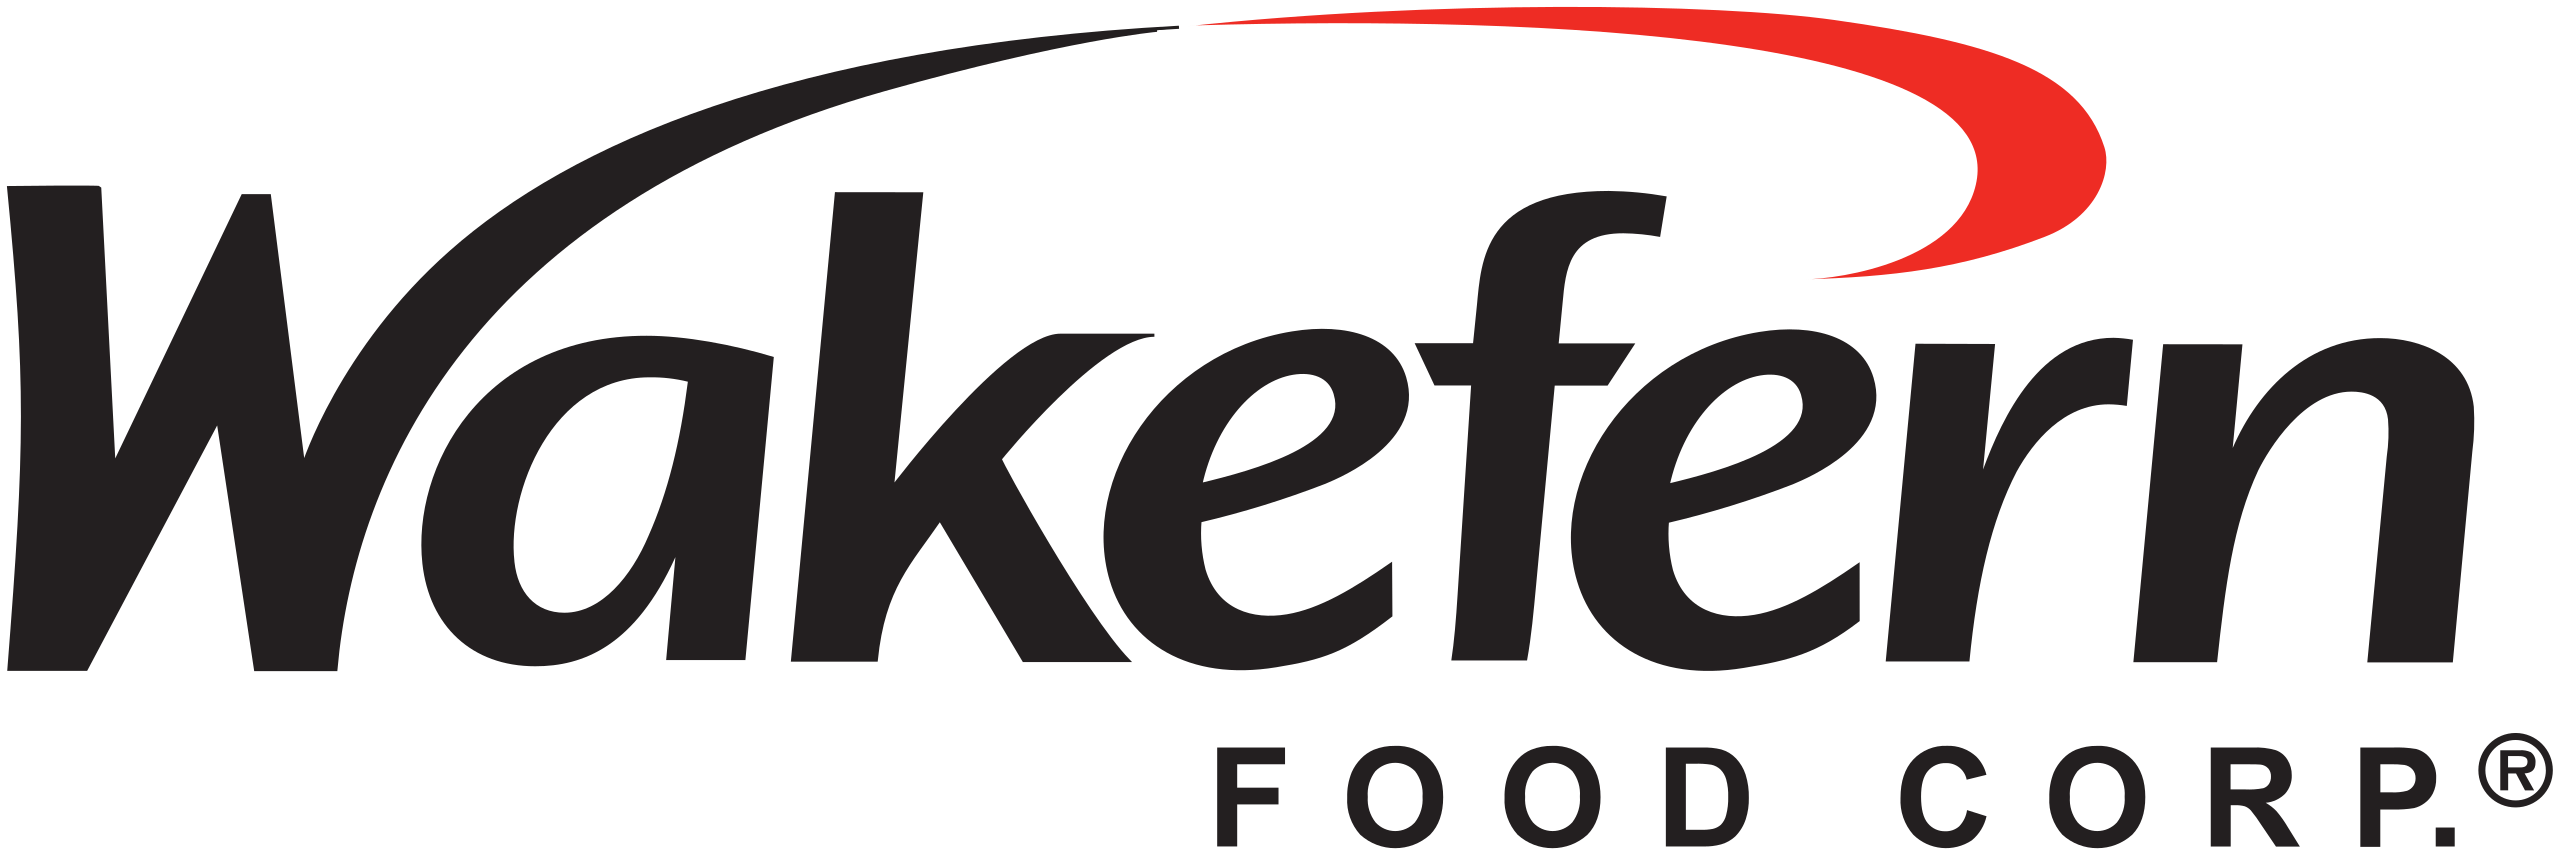 Wakefern_Food_Corporation_logo